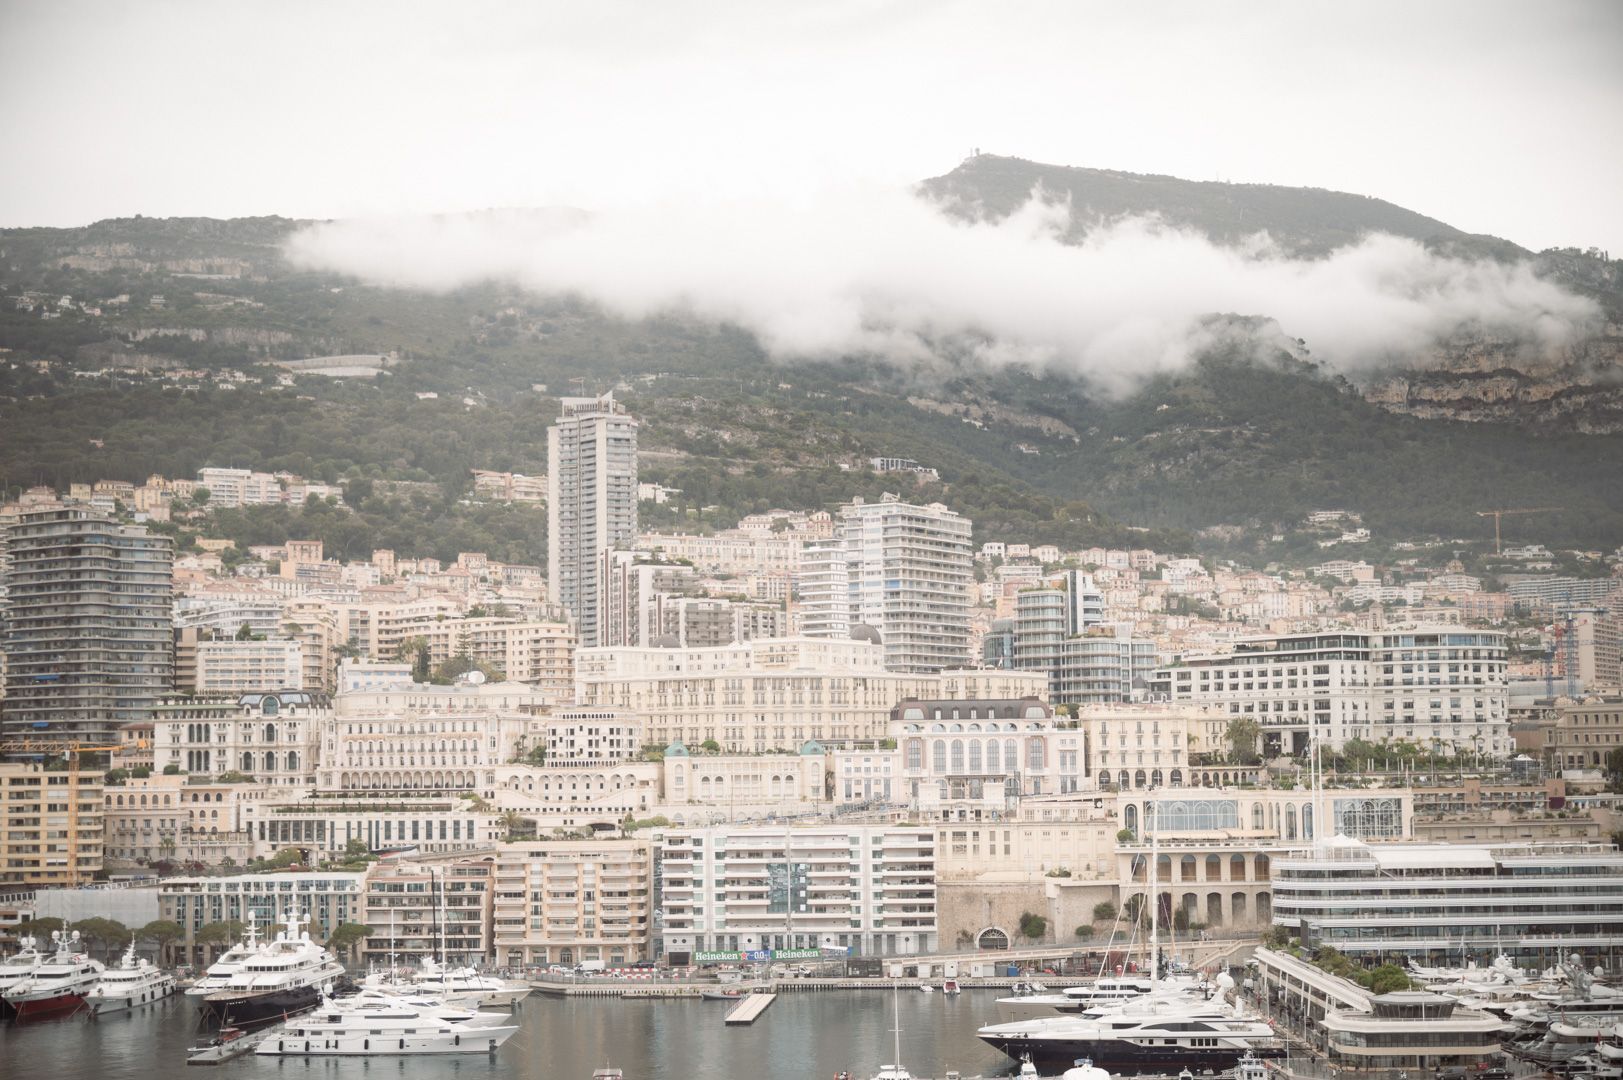 Monaco on a rainy day